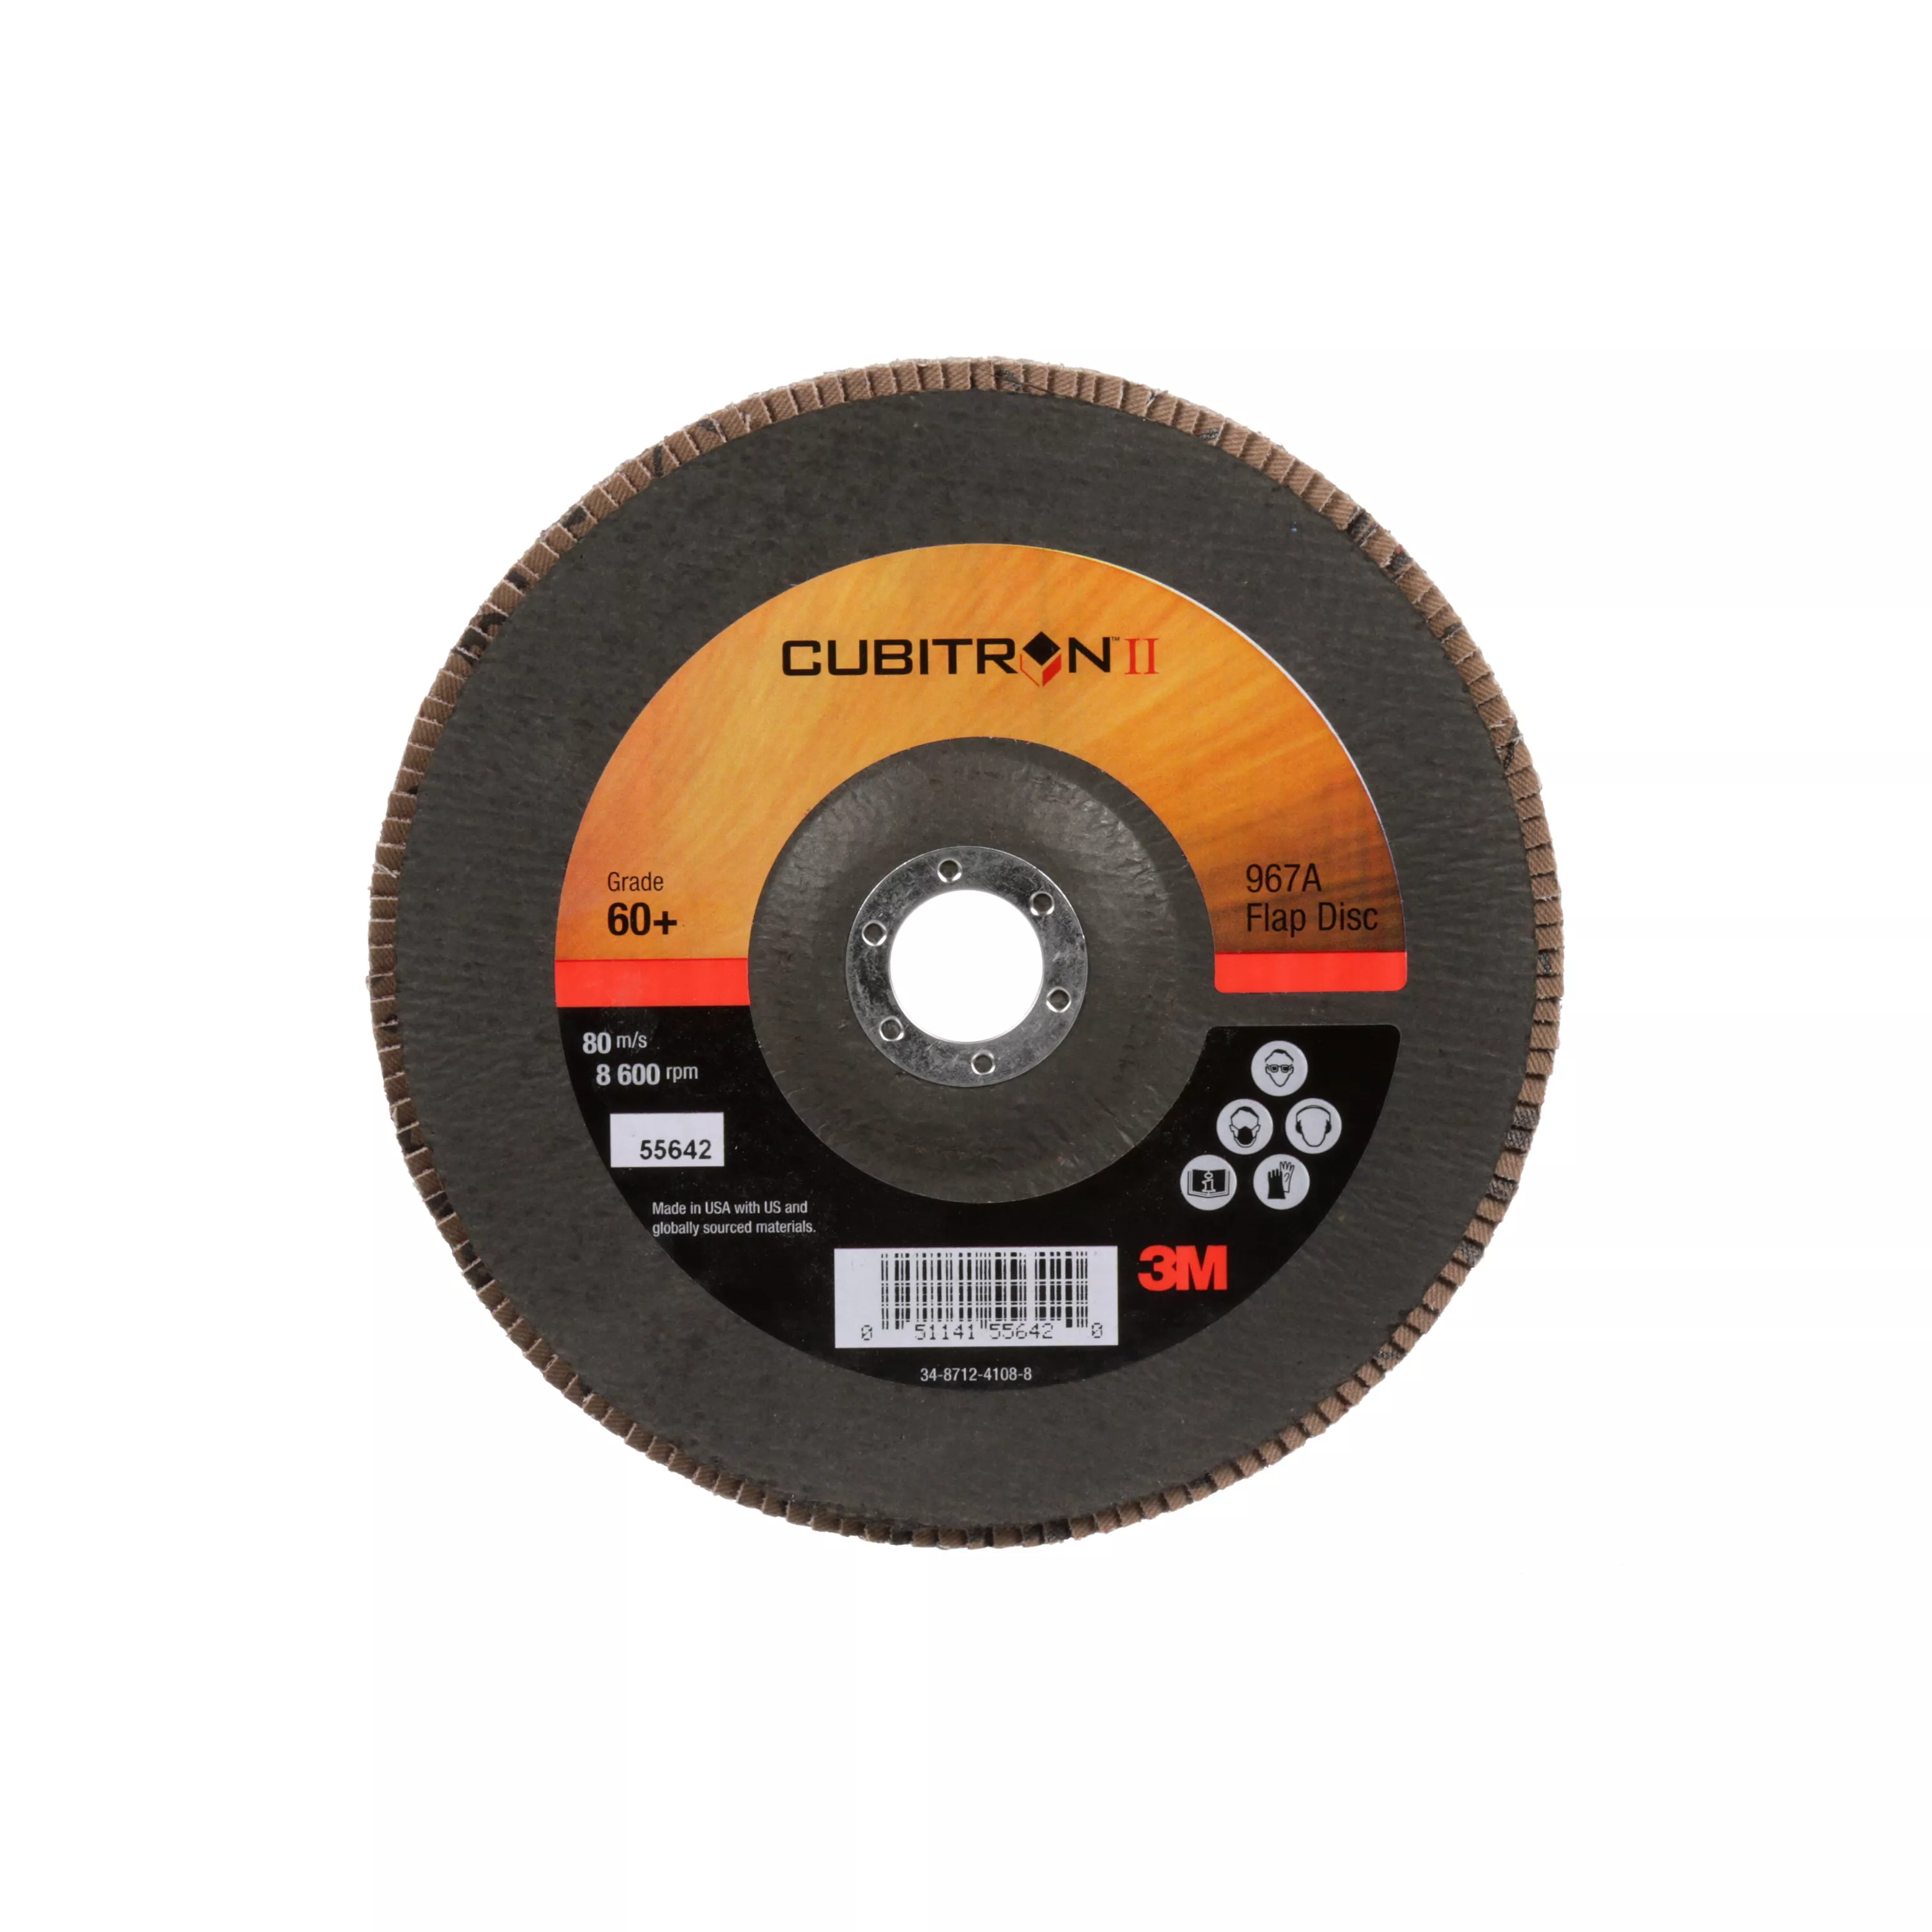 SKU 7010363305 | 3M™ Cubitron™ II Flap Disc 967A